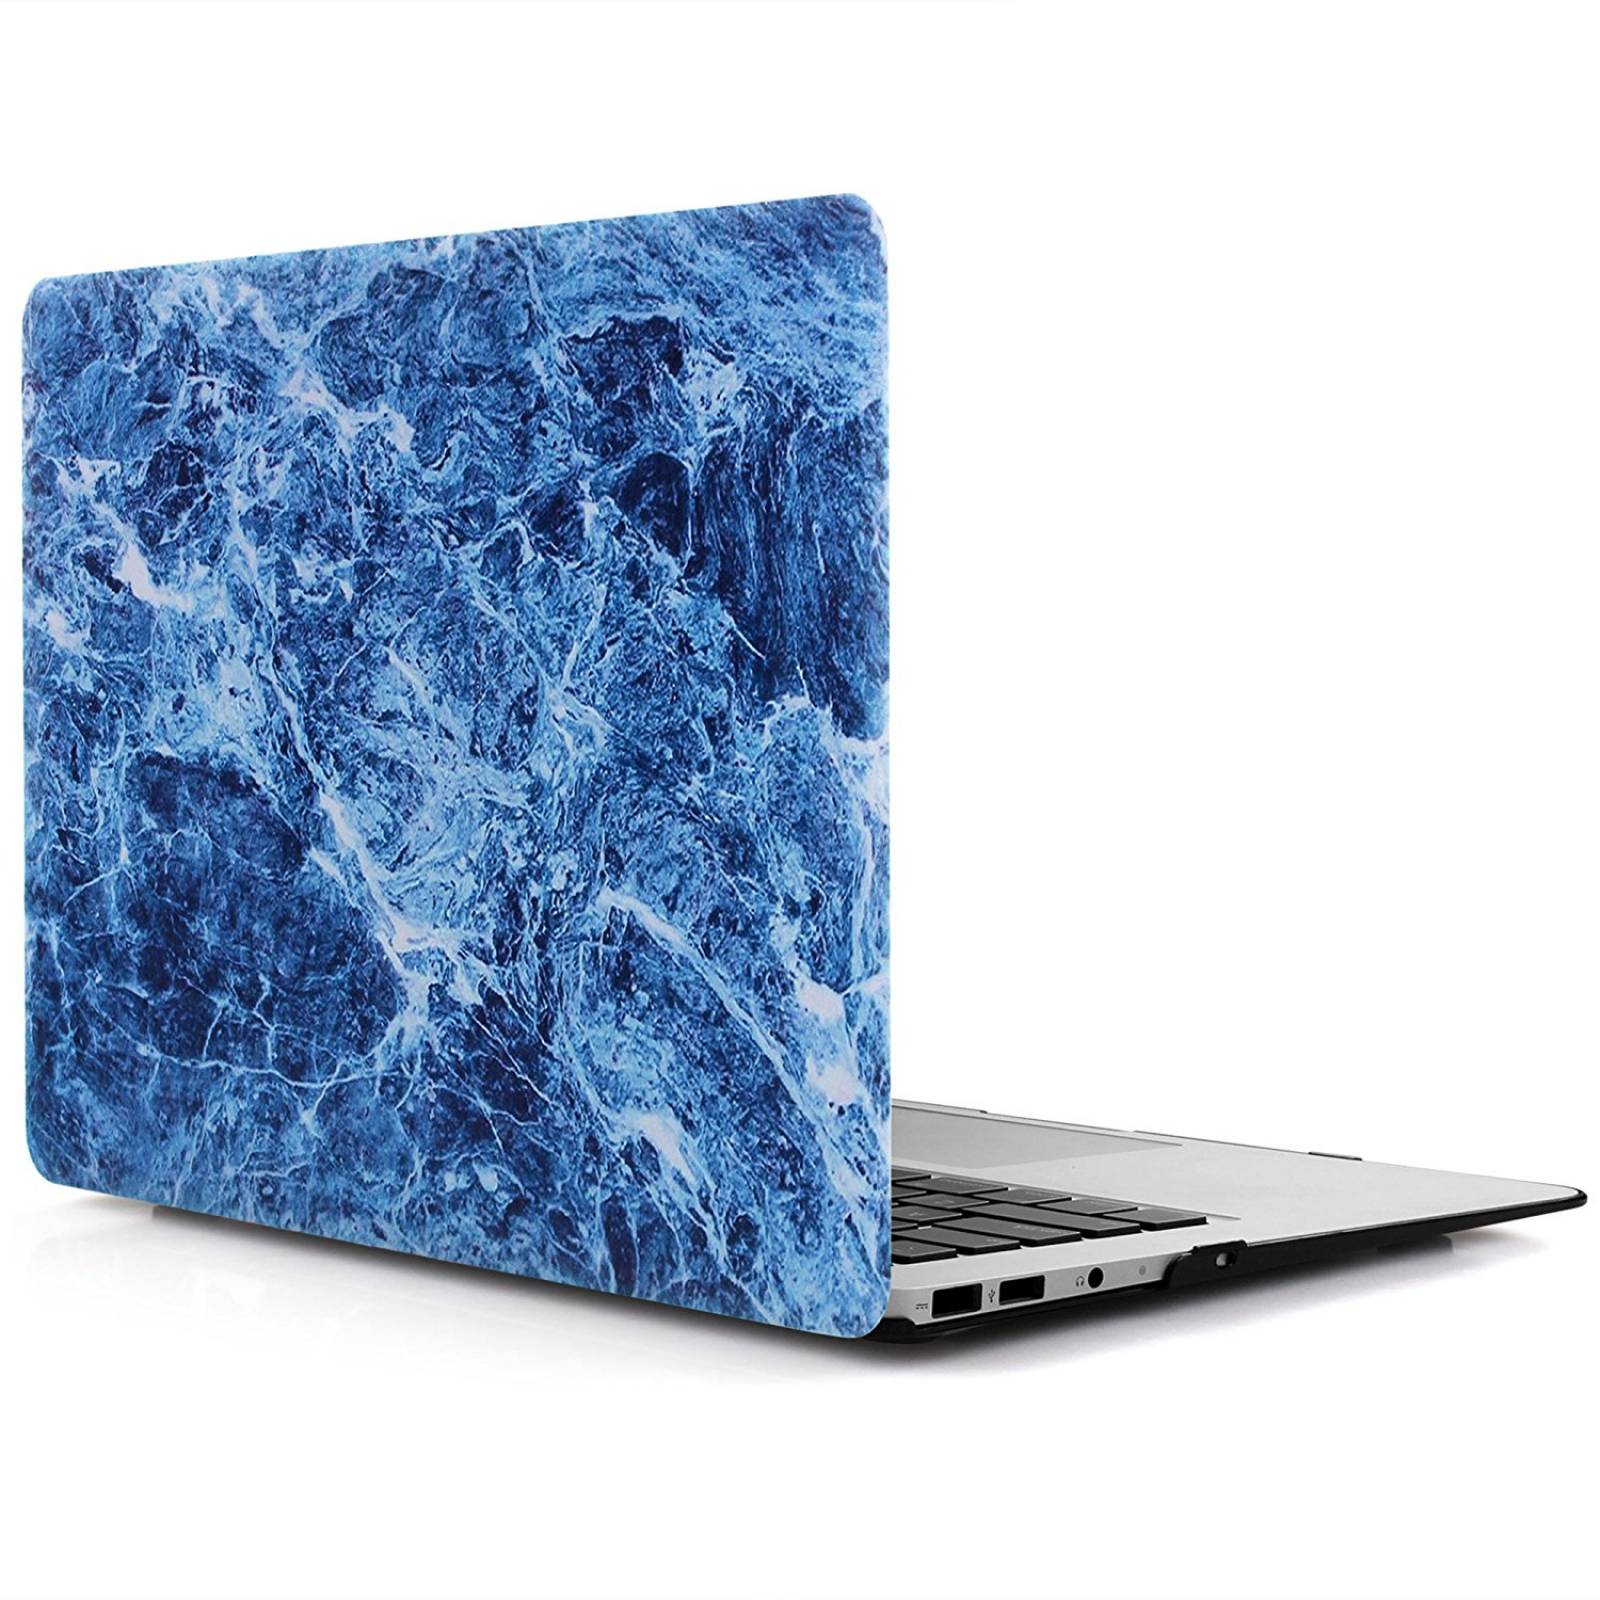 iDOO mate grabado estuche duro MacBook Air 13 pulgadas -Azul